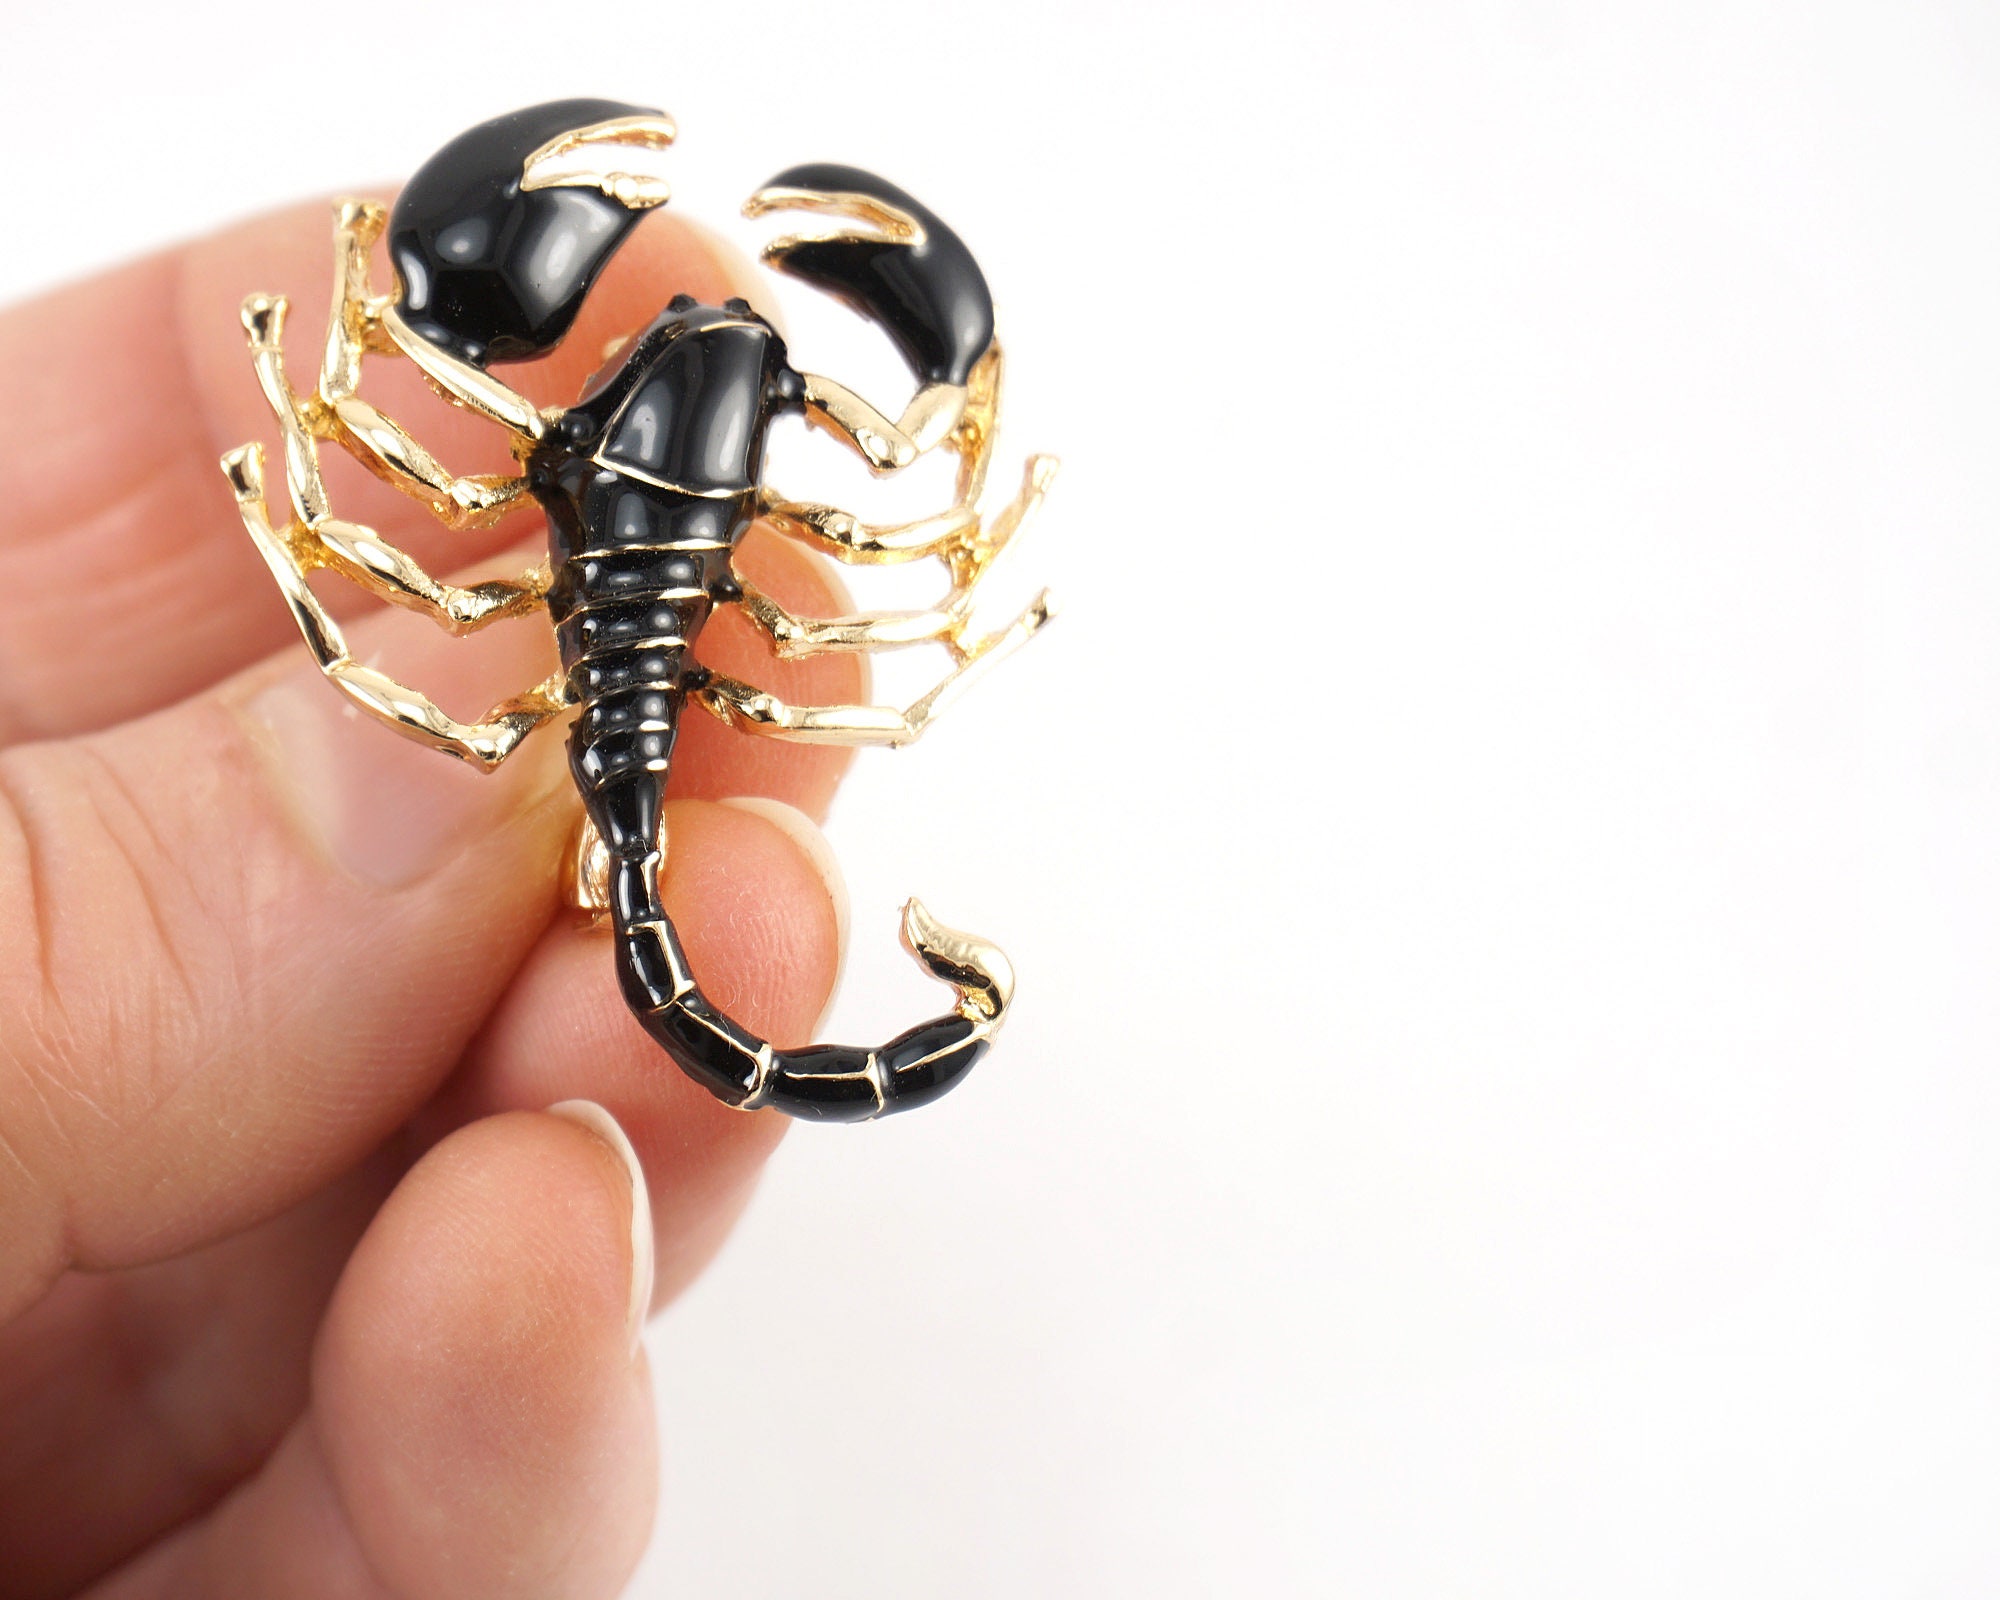 Horoscope Scorpio roach clips smoking weed enamel lapel hat pin